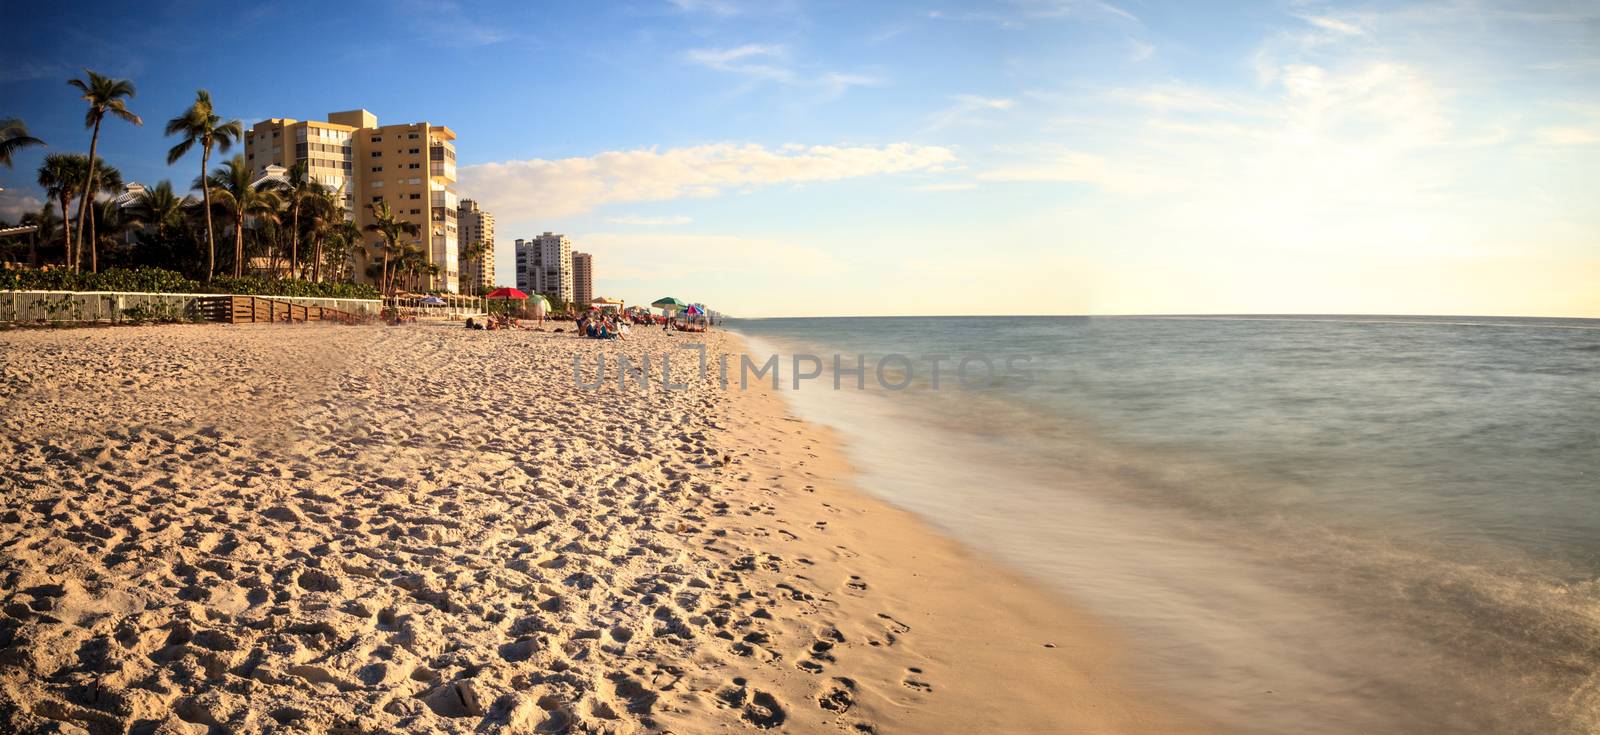 White sand and palm trees along Vanderbilt Beach in Naples, Florida, USA